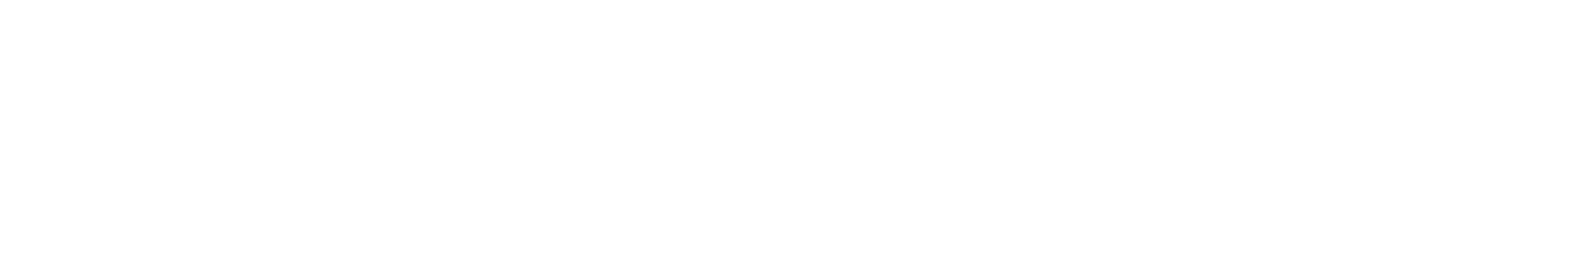 Arendals Fossekompani Logo groß für dunkle Hintergründe (transparentes PNG)